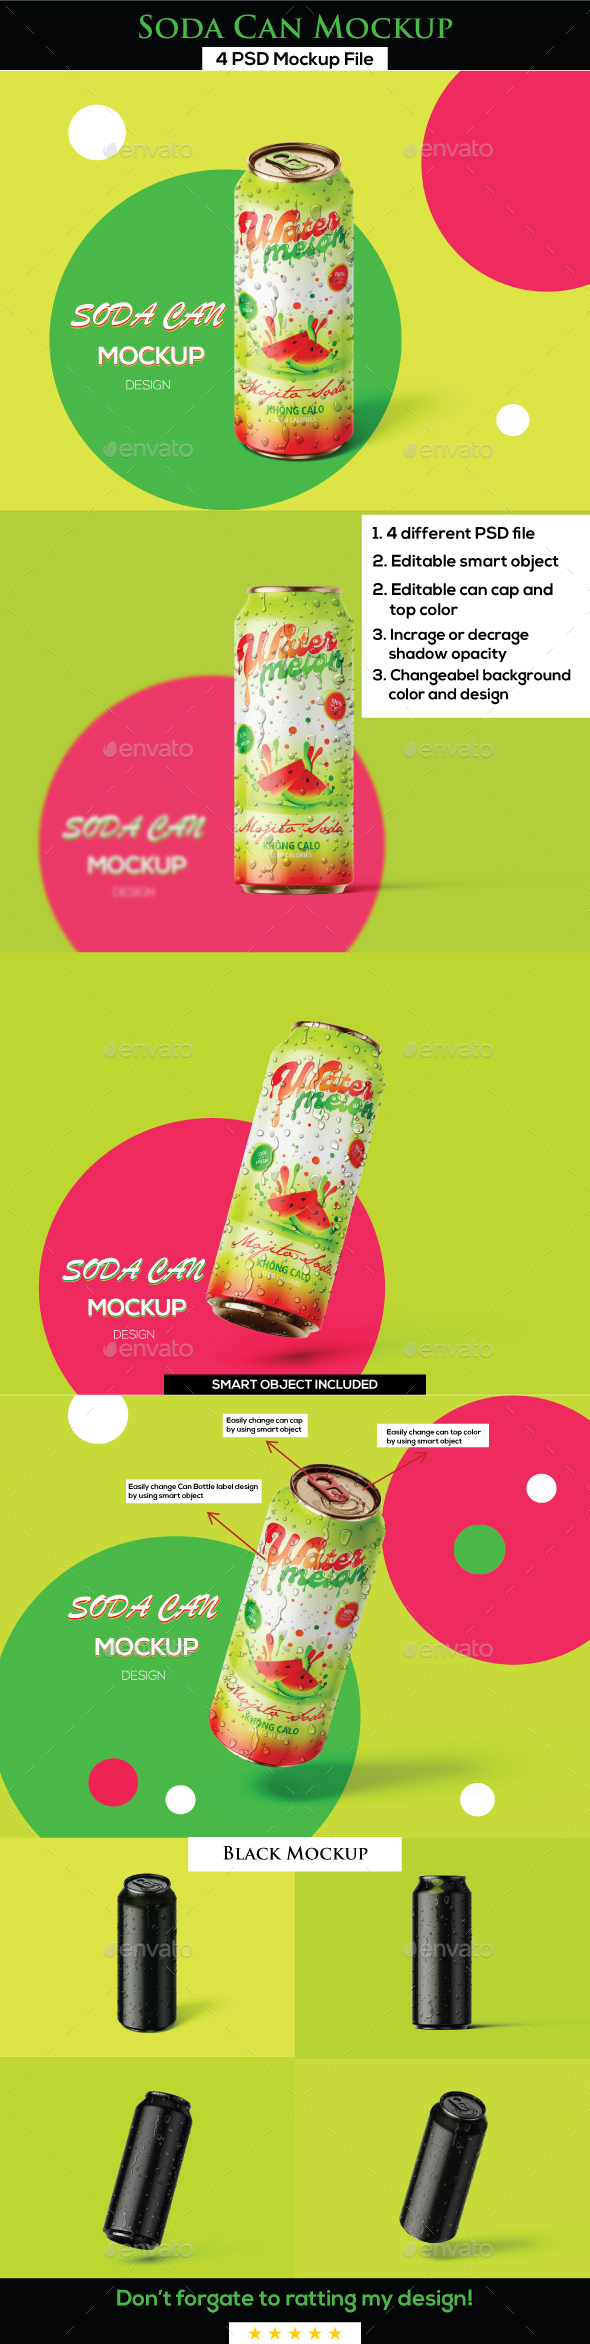 Soda Can Mockup - 2